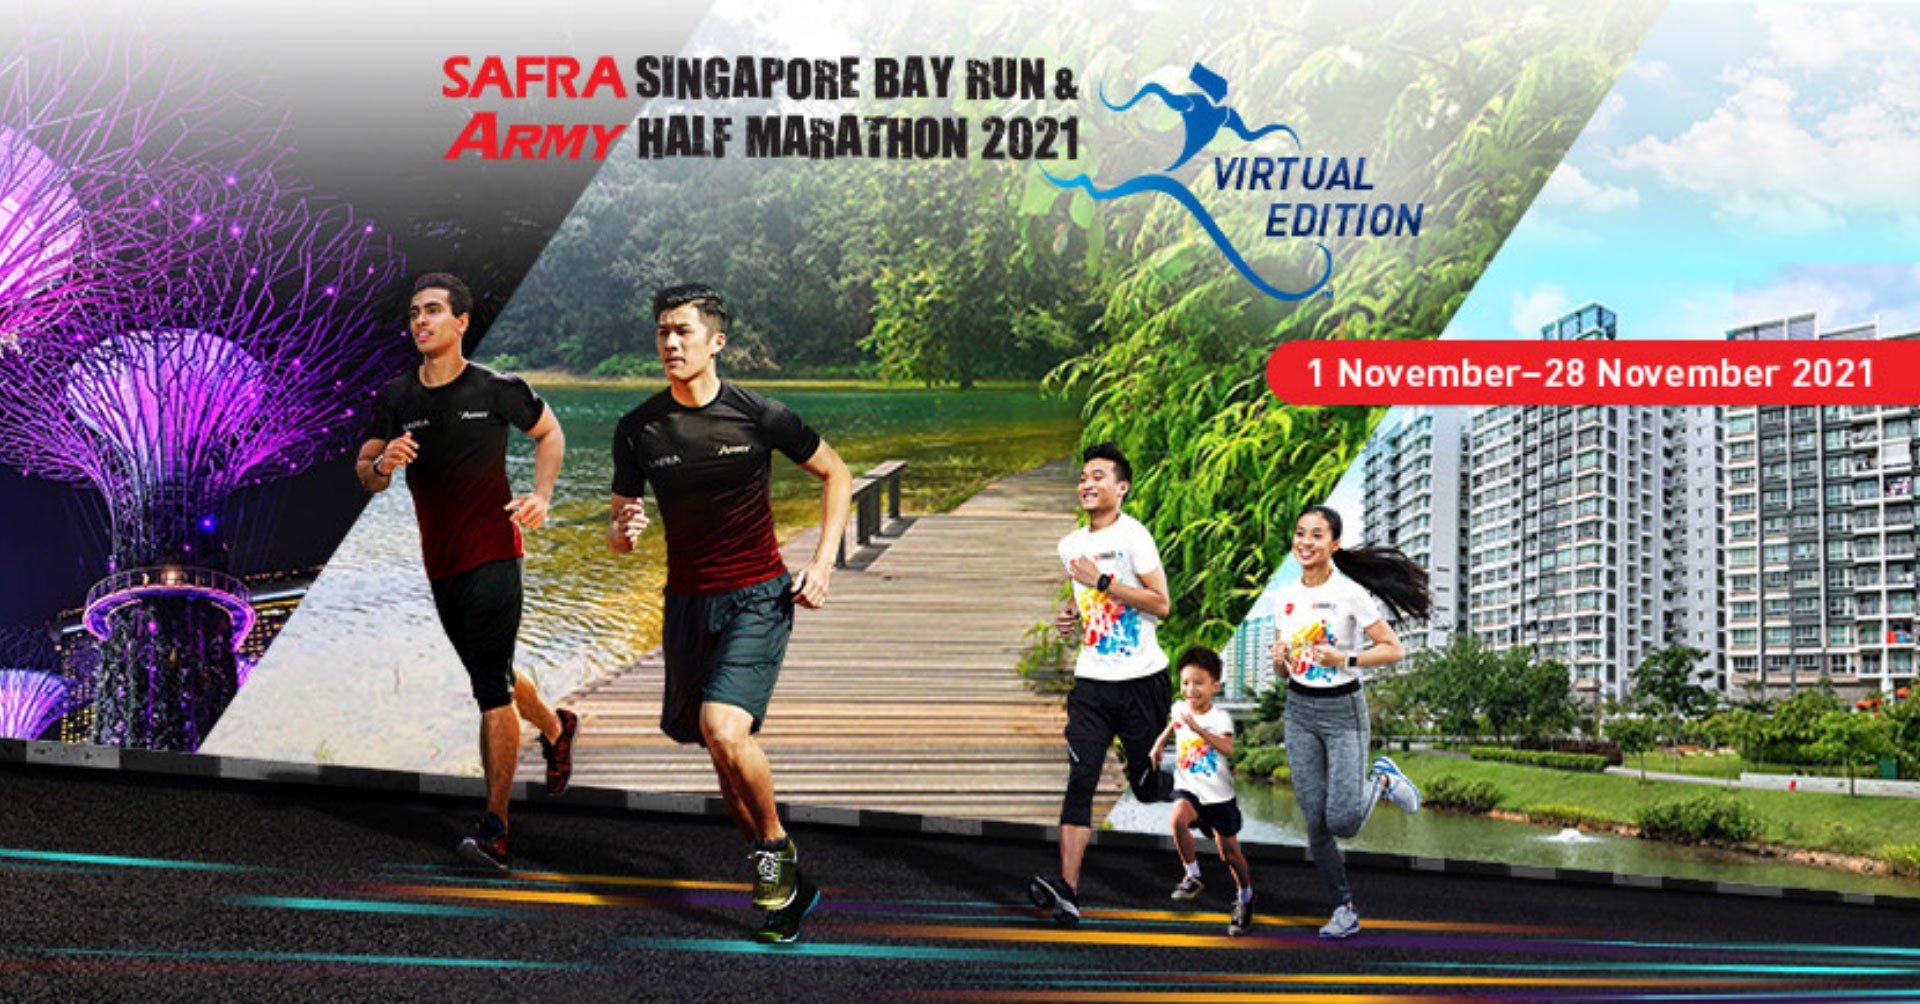 Logo of SAFRA Singapore Bay Run & Army Half Marathon 2021 (Virtual Edition)